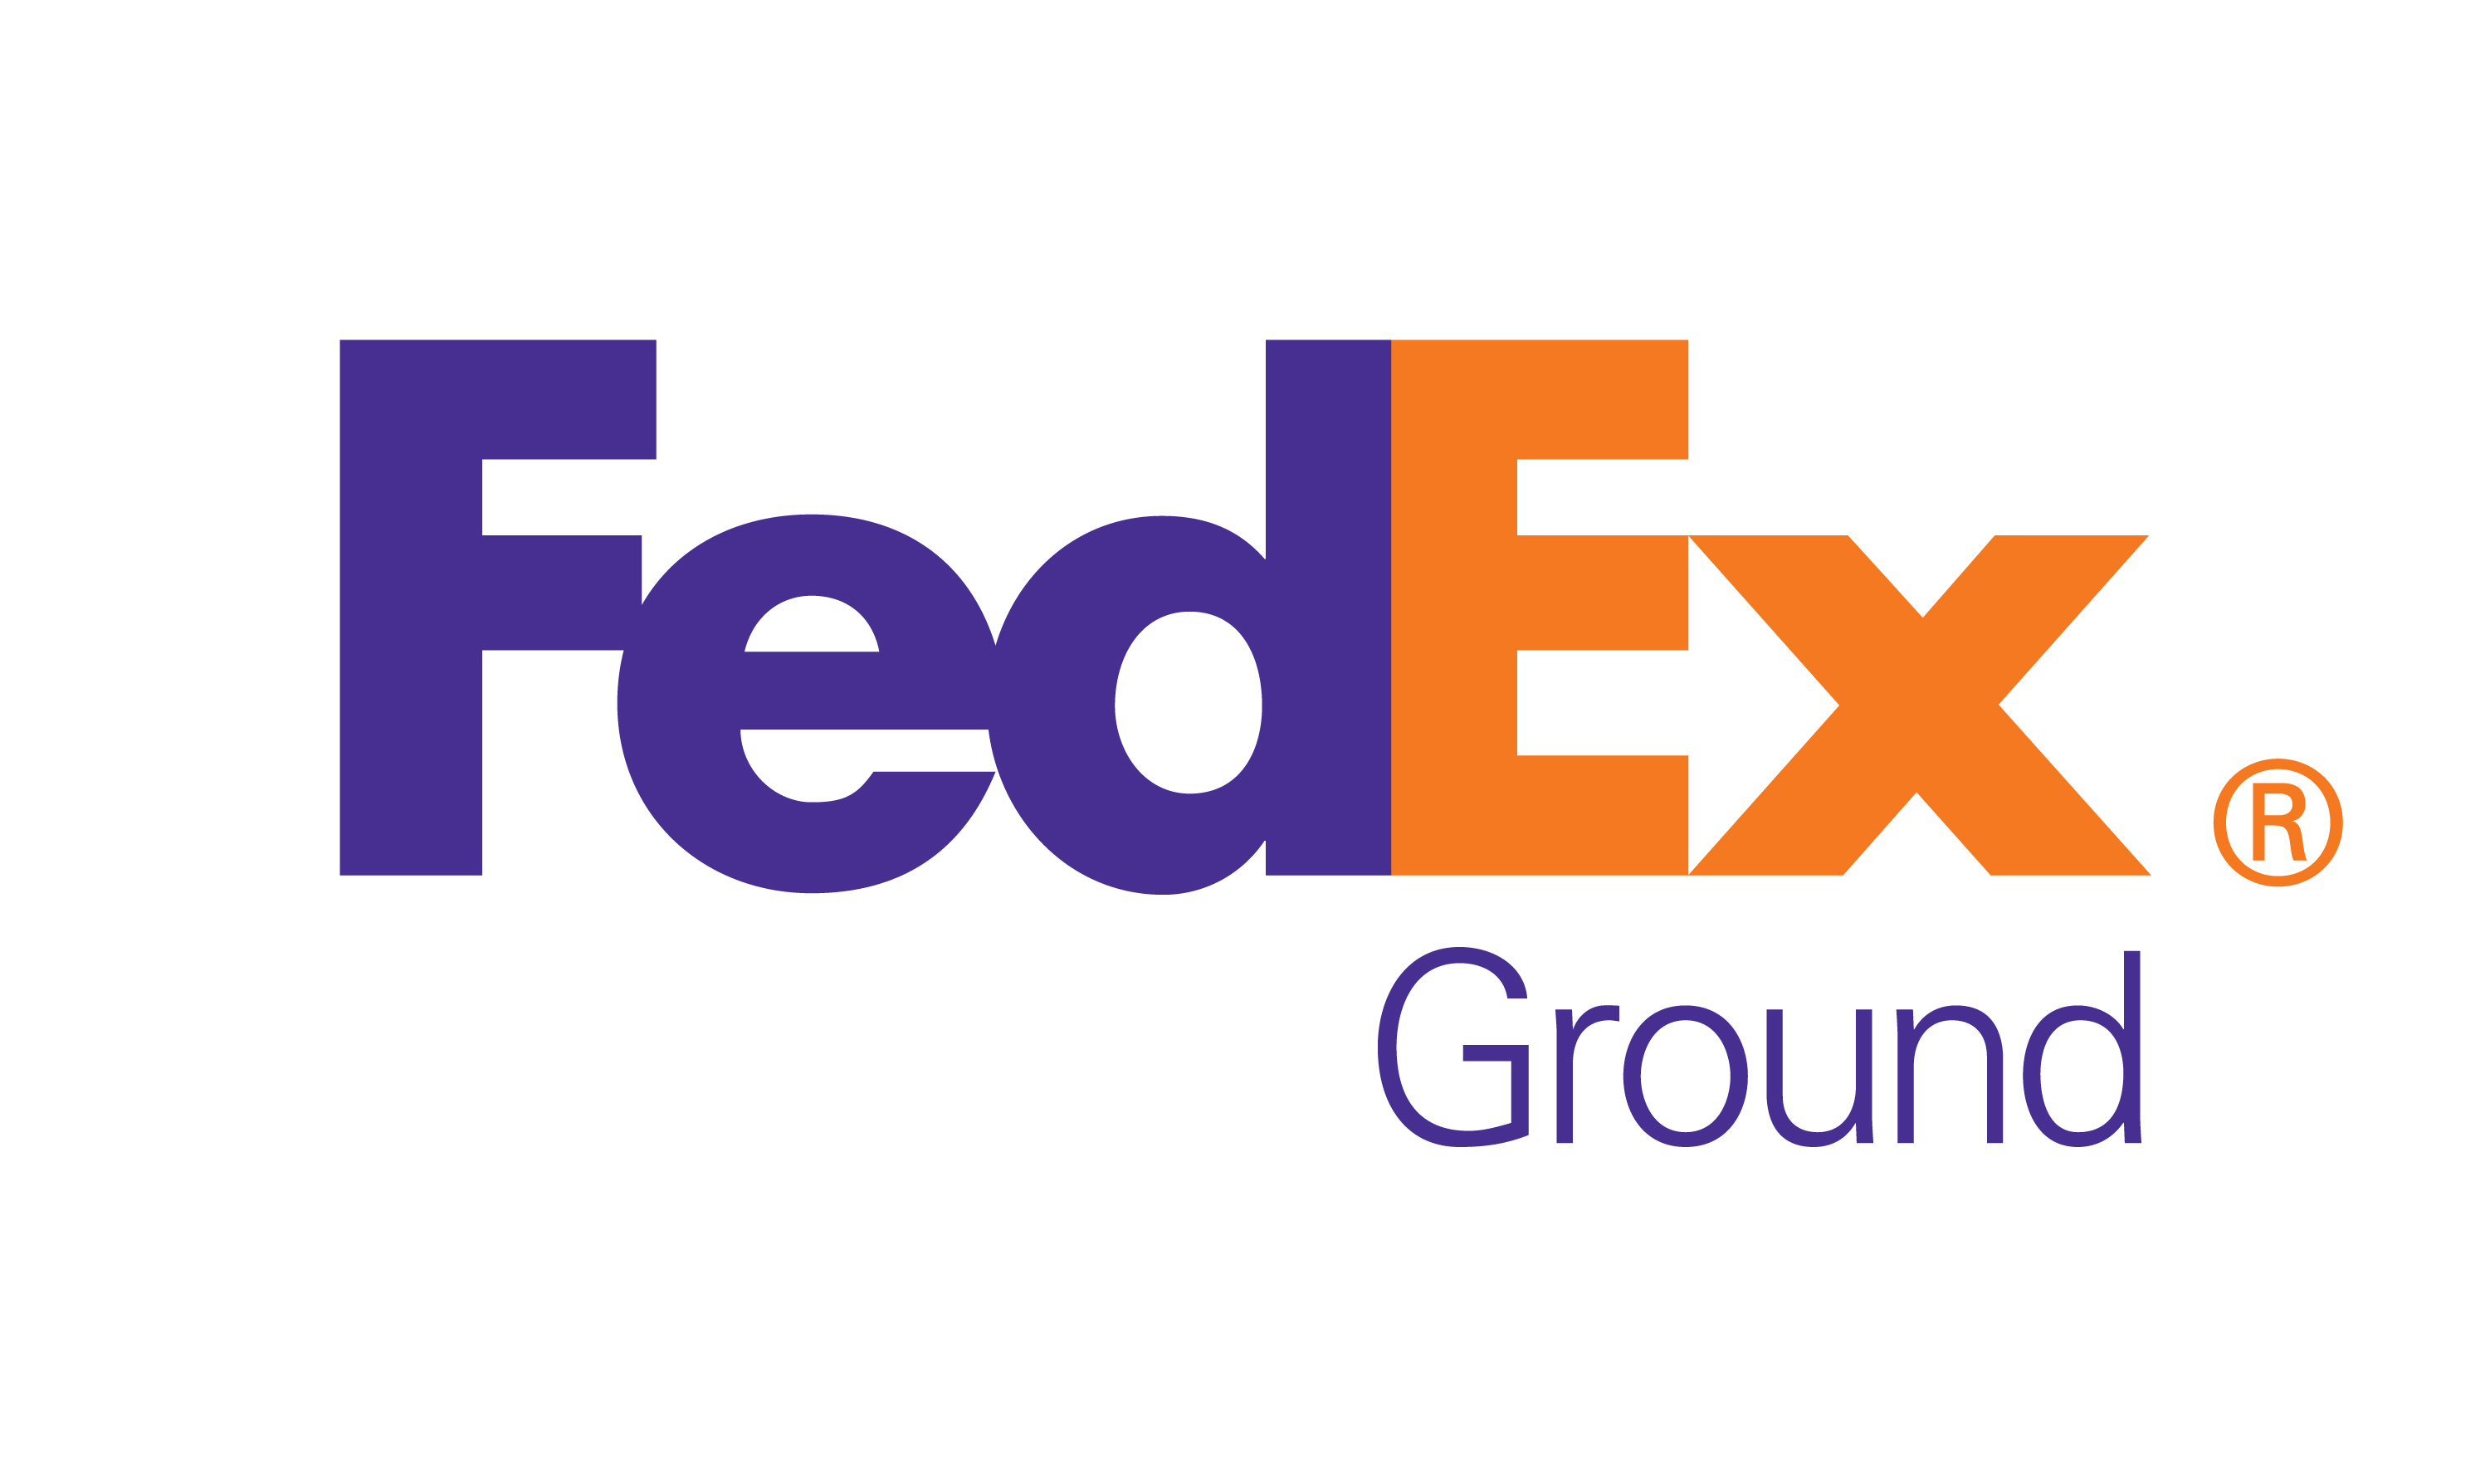 FedEx_Ground_Purple_Orange_Print